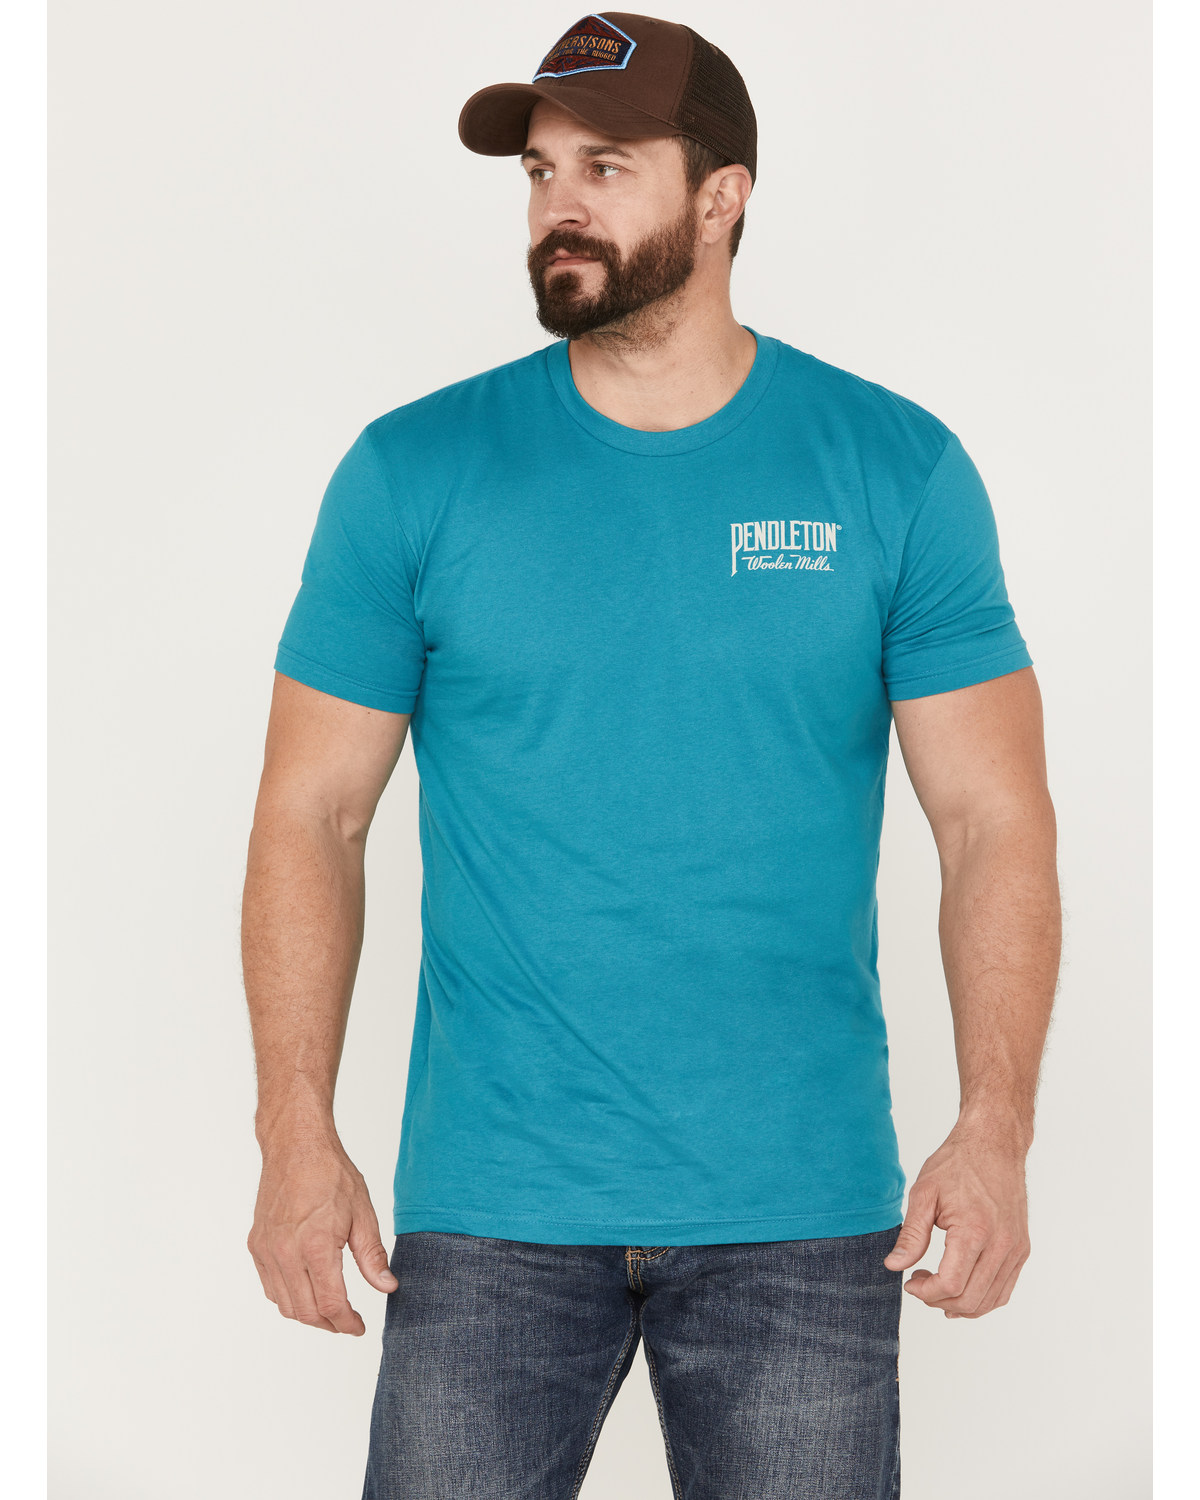 Pendleton Men's Original Western Logo Graphic Short Sleeve T-Shirt